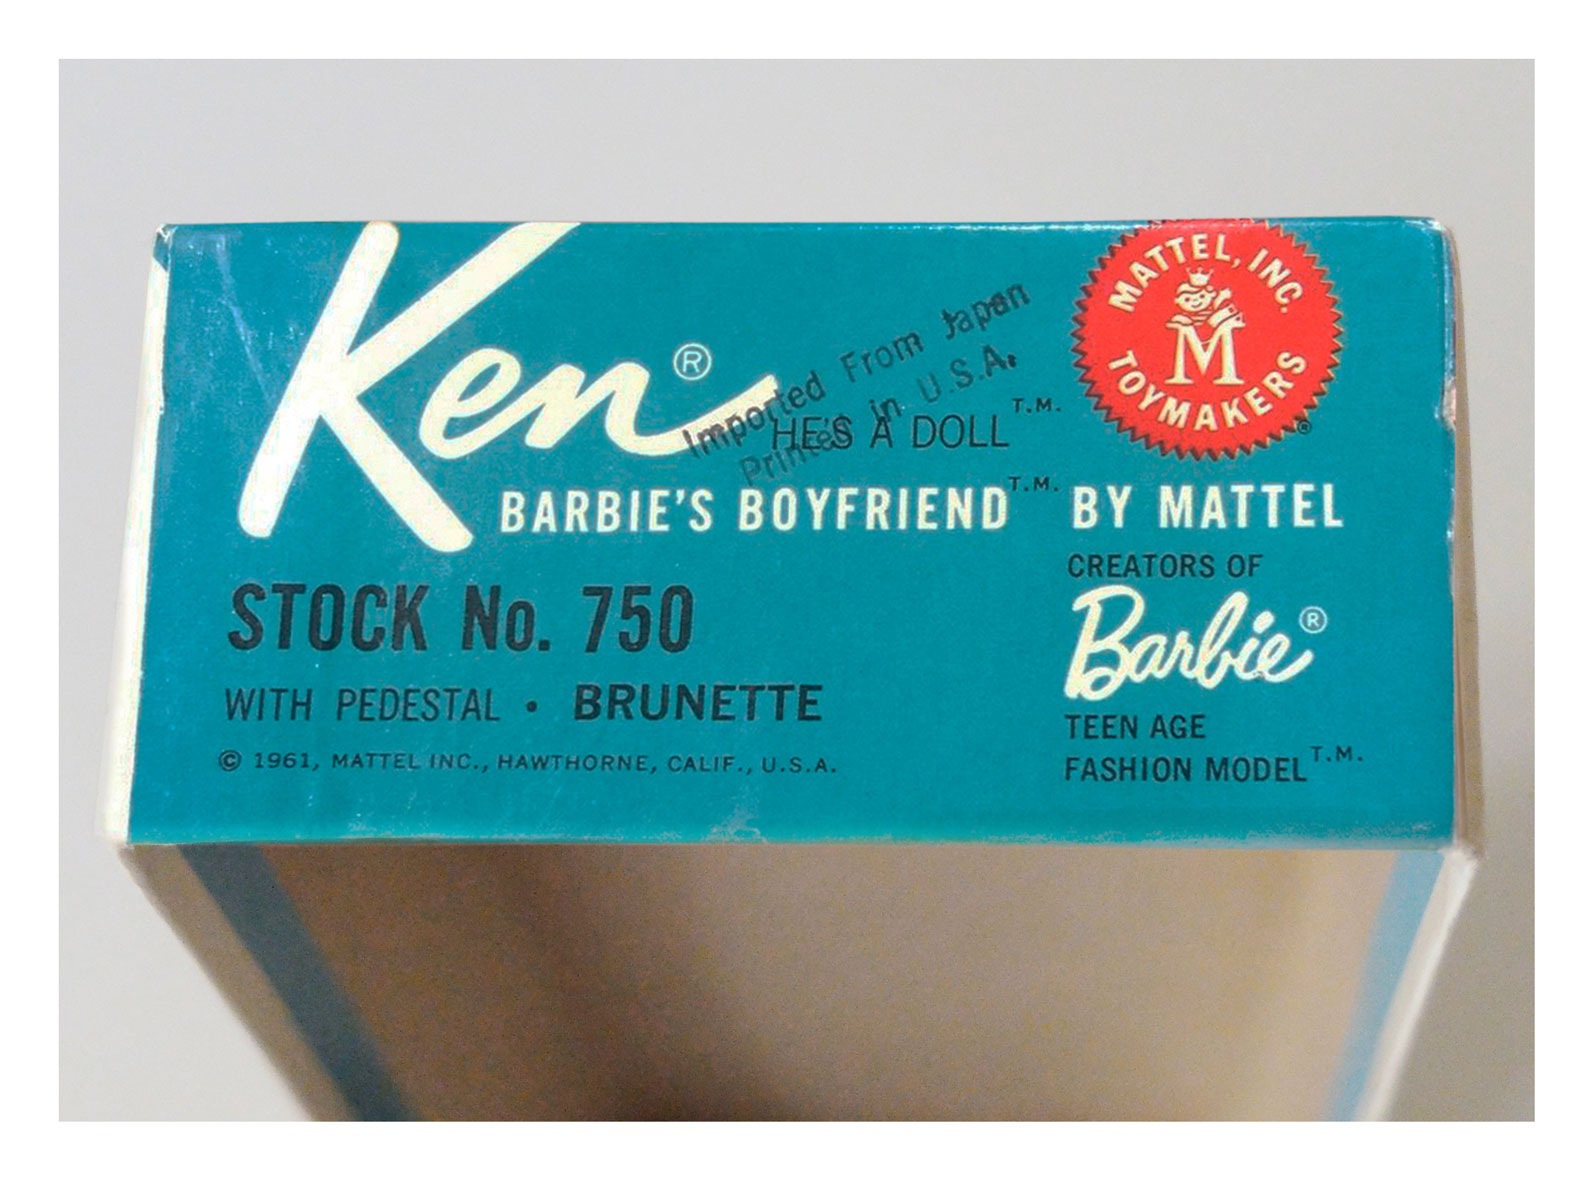 1964-67 #0750 USA 'shorty' Ken box containing Japan-made Ken